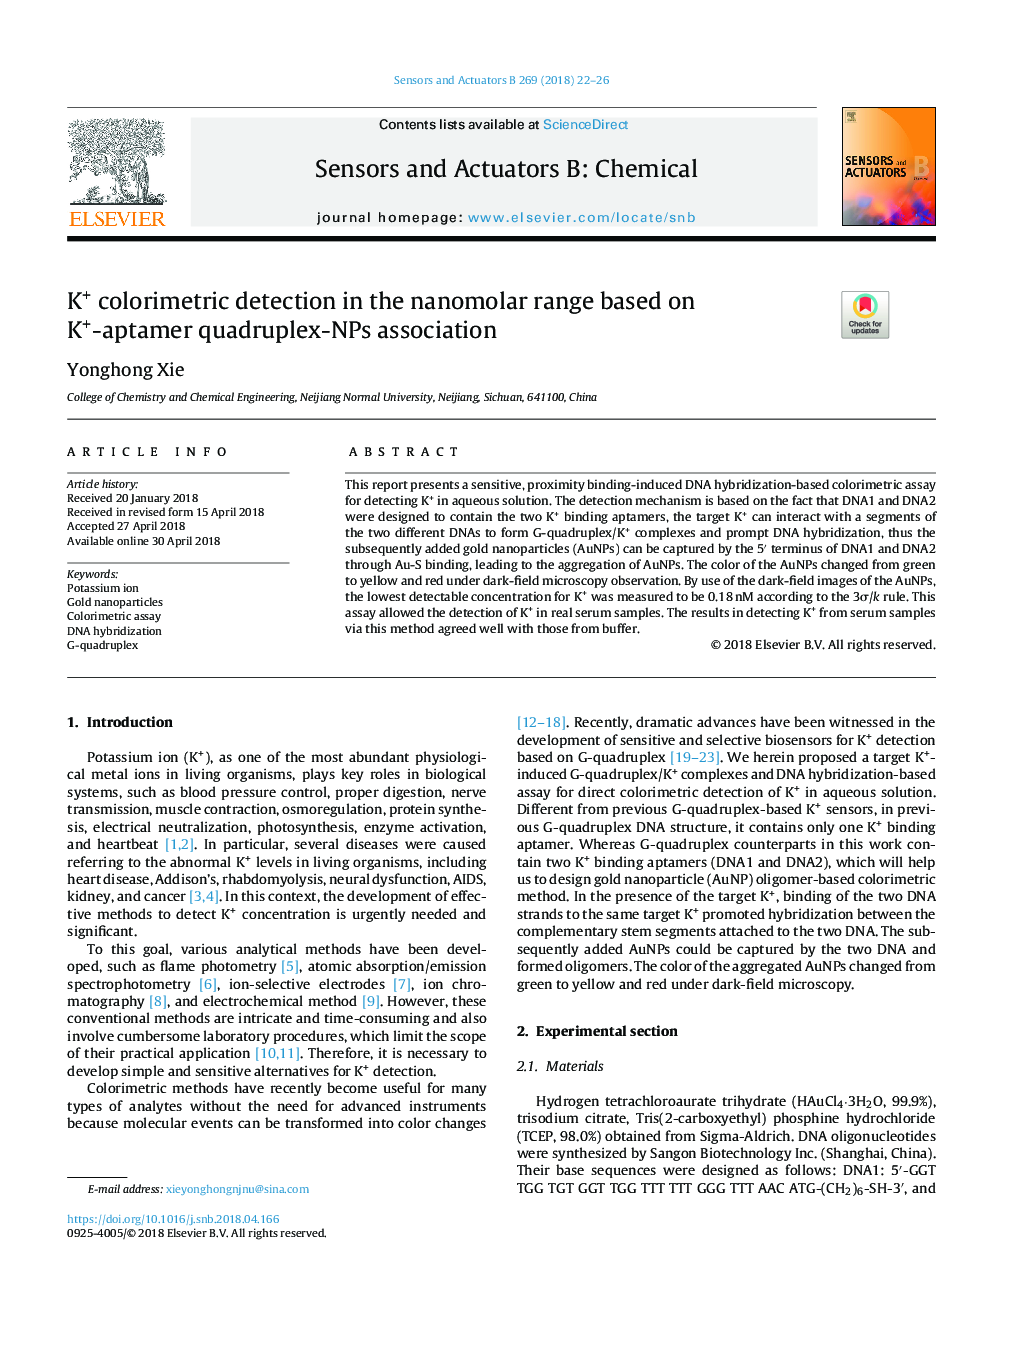 K+ colorimetric detection in the nanomolar range based on K+-aptamer quadruplex-NPs association